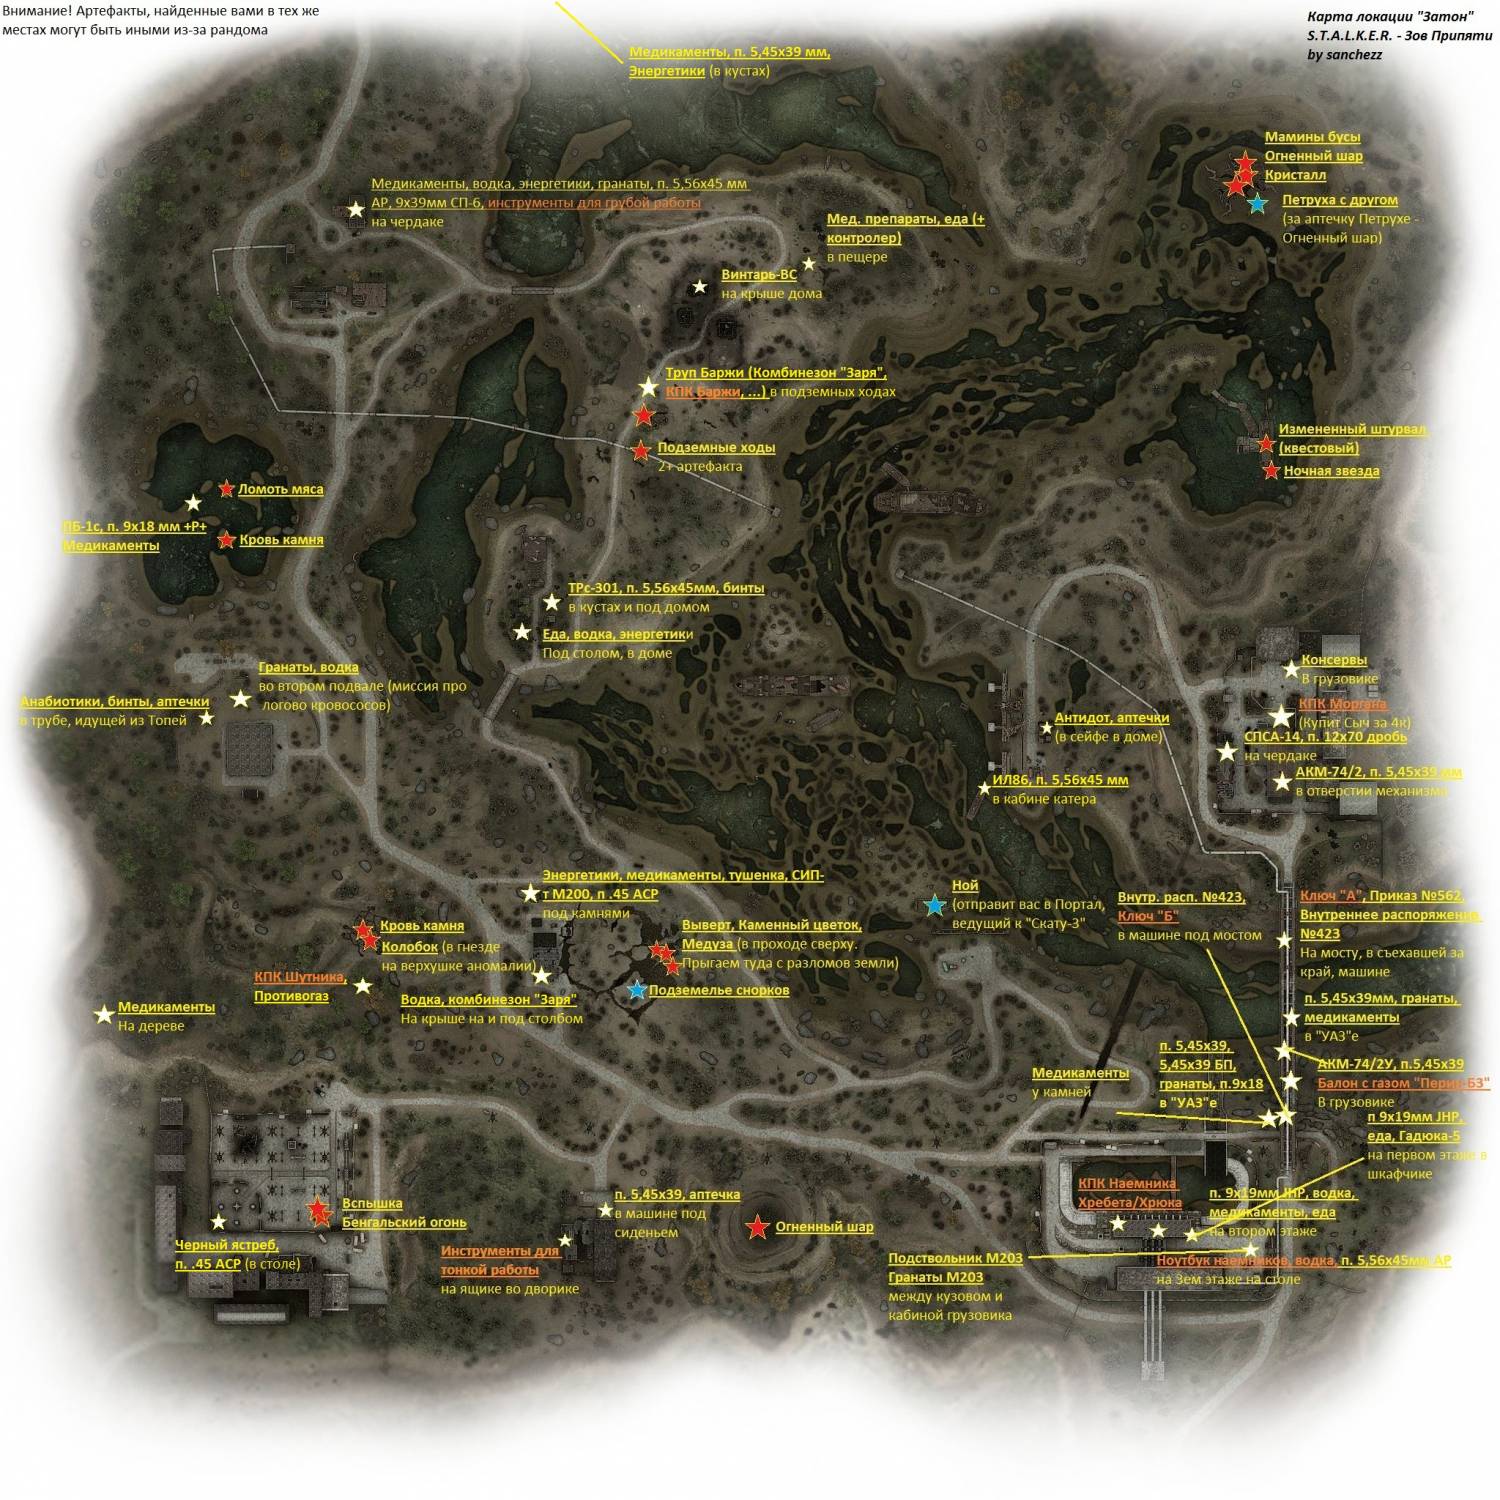 Steam Community :: Guide :: Тайники в игре S.T.A.L.K.E.R.: Call of Pripyat.